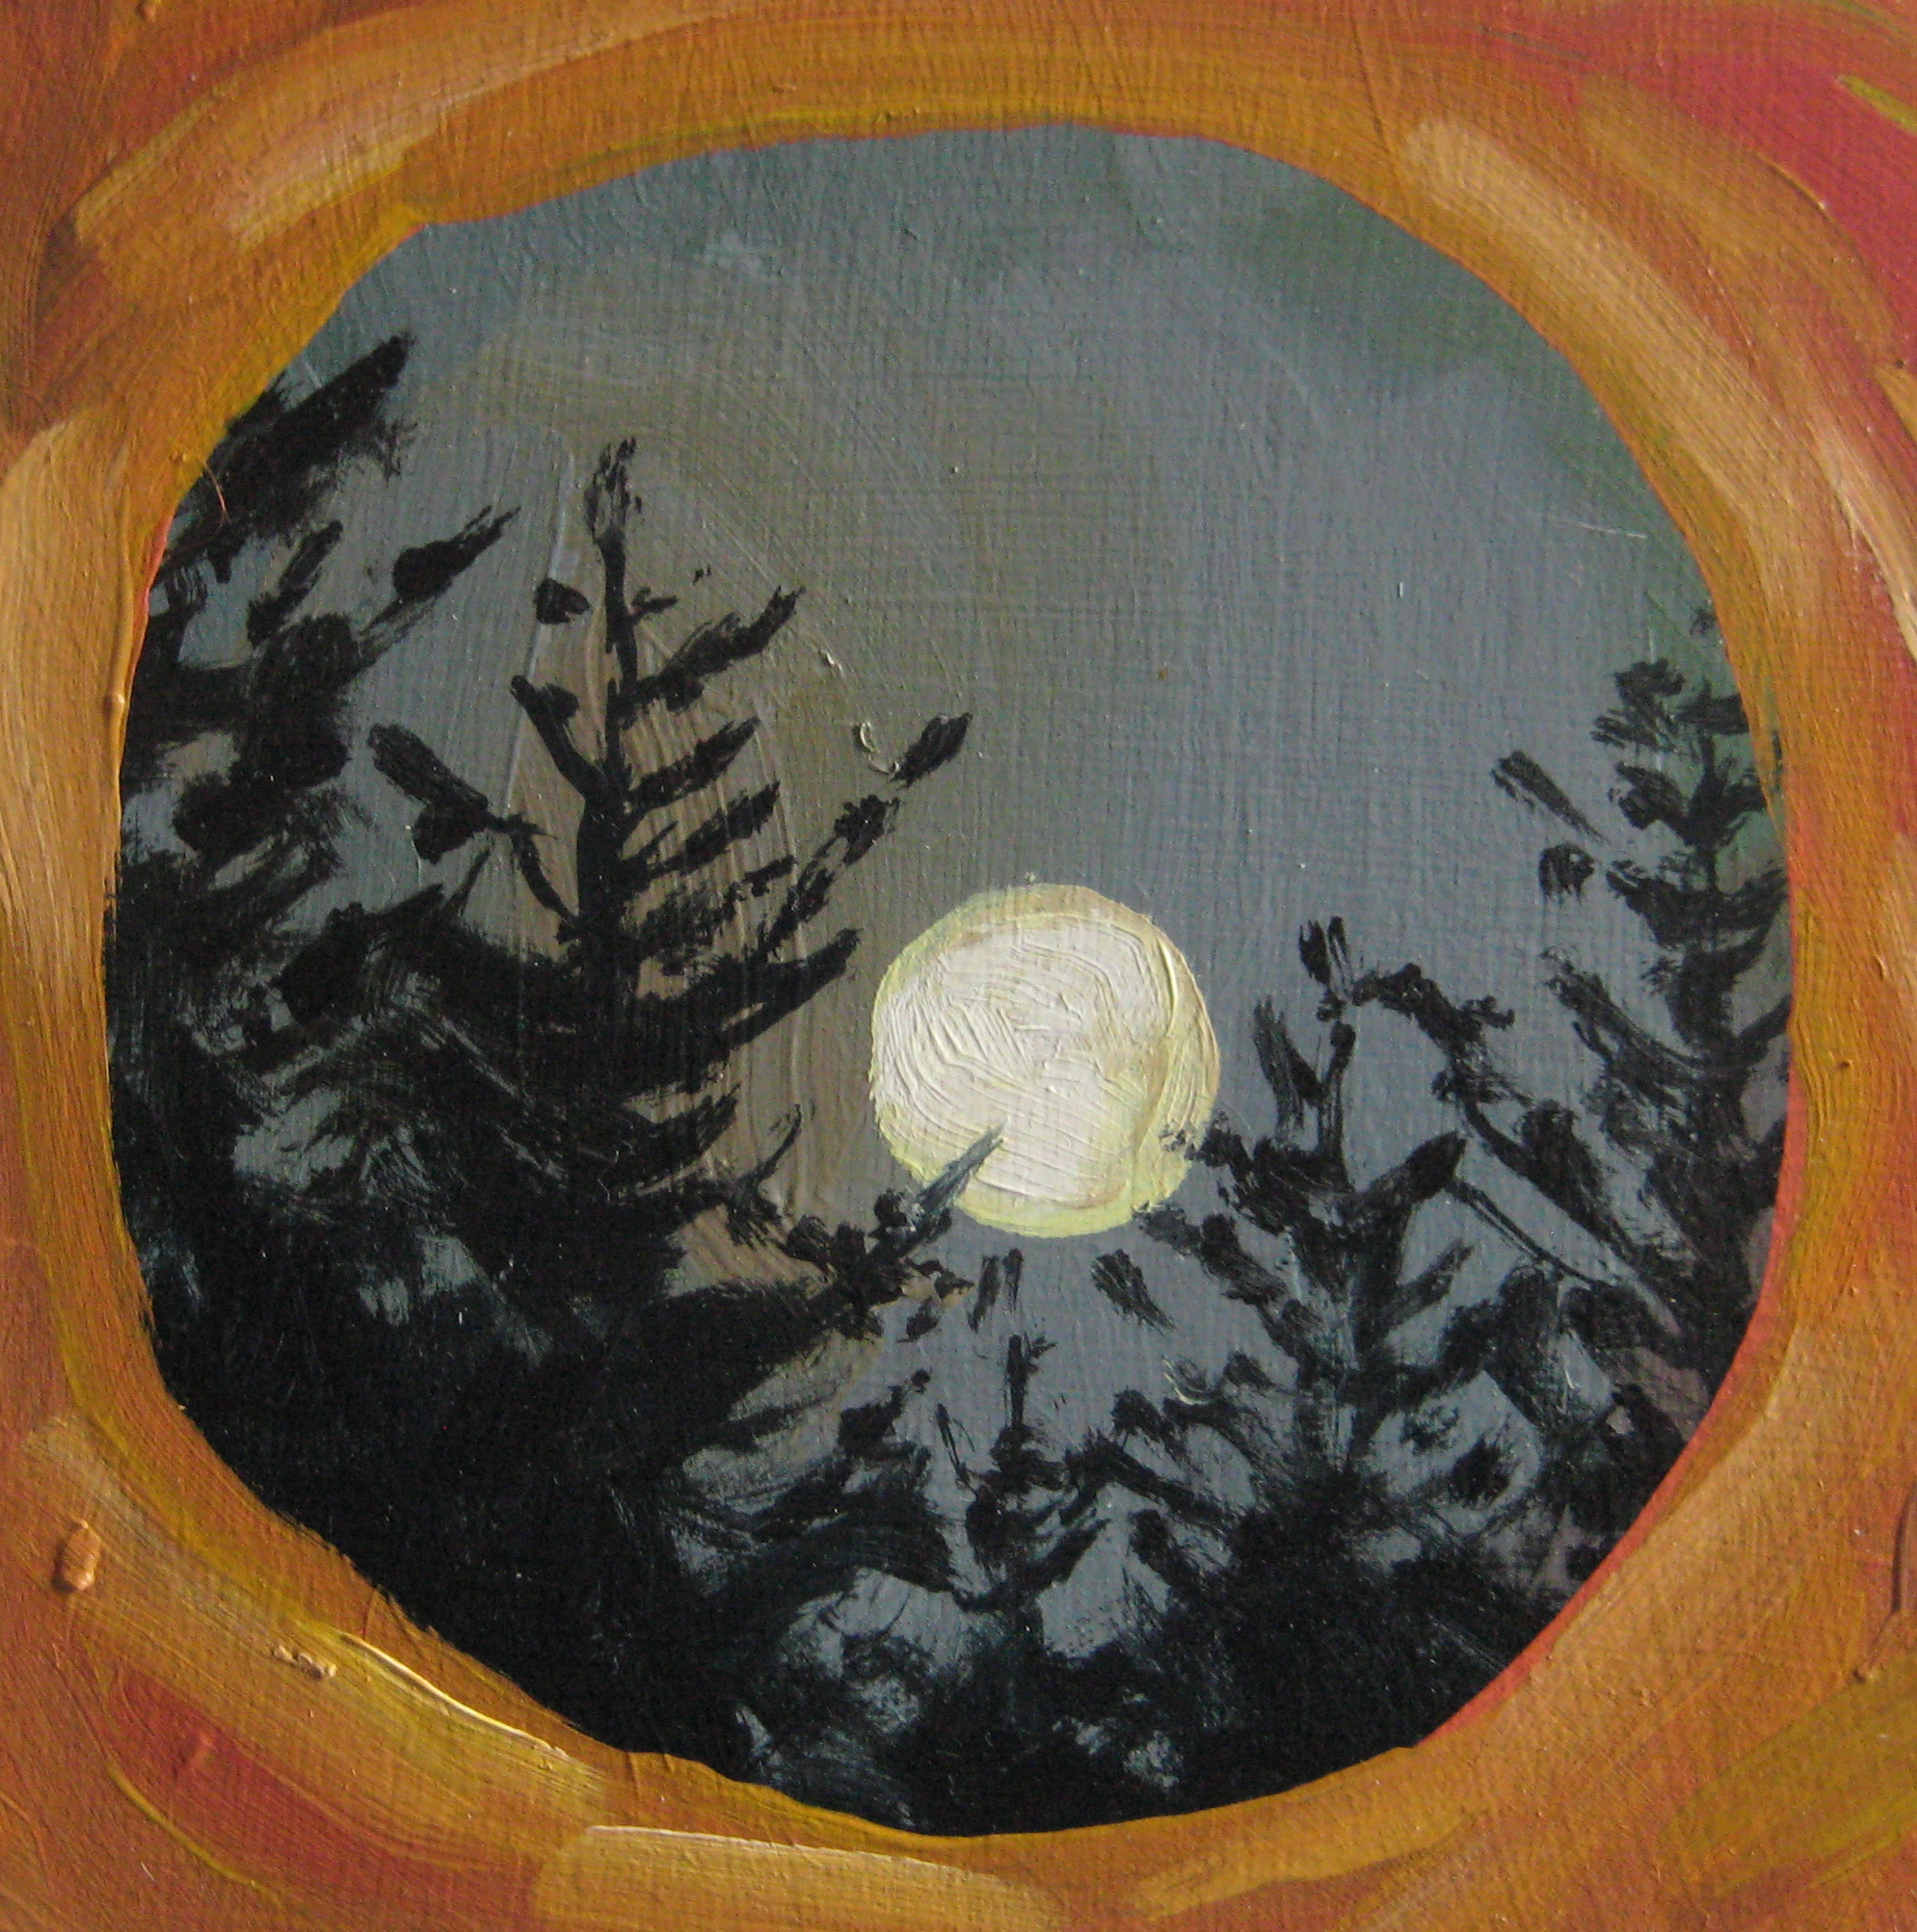 Full moon over forest